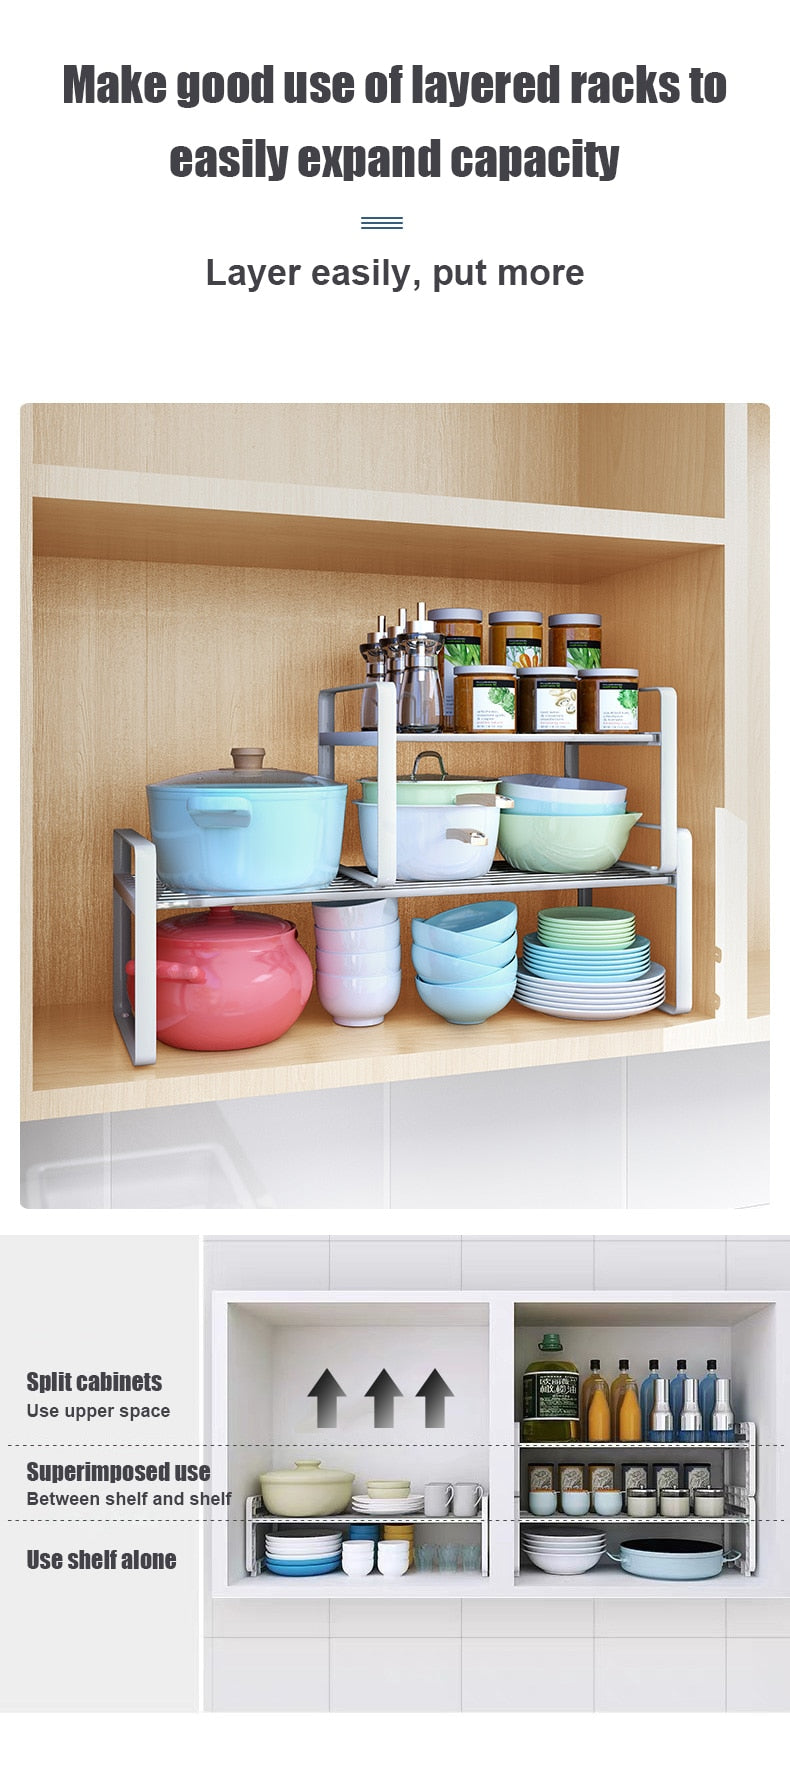 Kitchen Cabinet Storage Adjustable Cook Shelves Plates Pans Dishes Spice Bottles Holder Multifunction Kitchen Closet Organizer